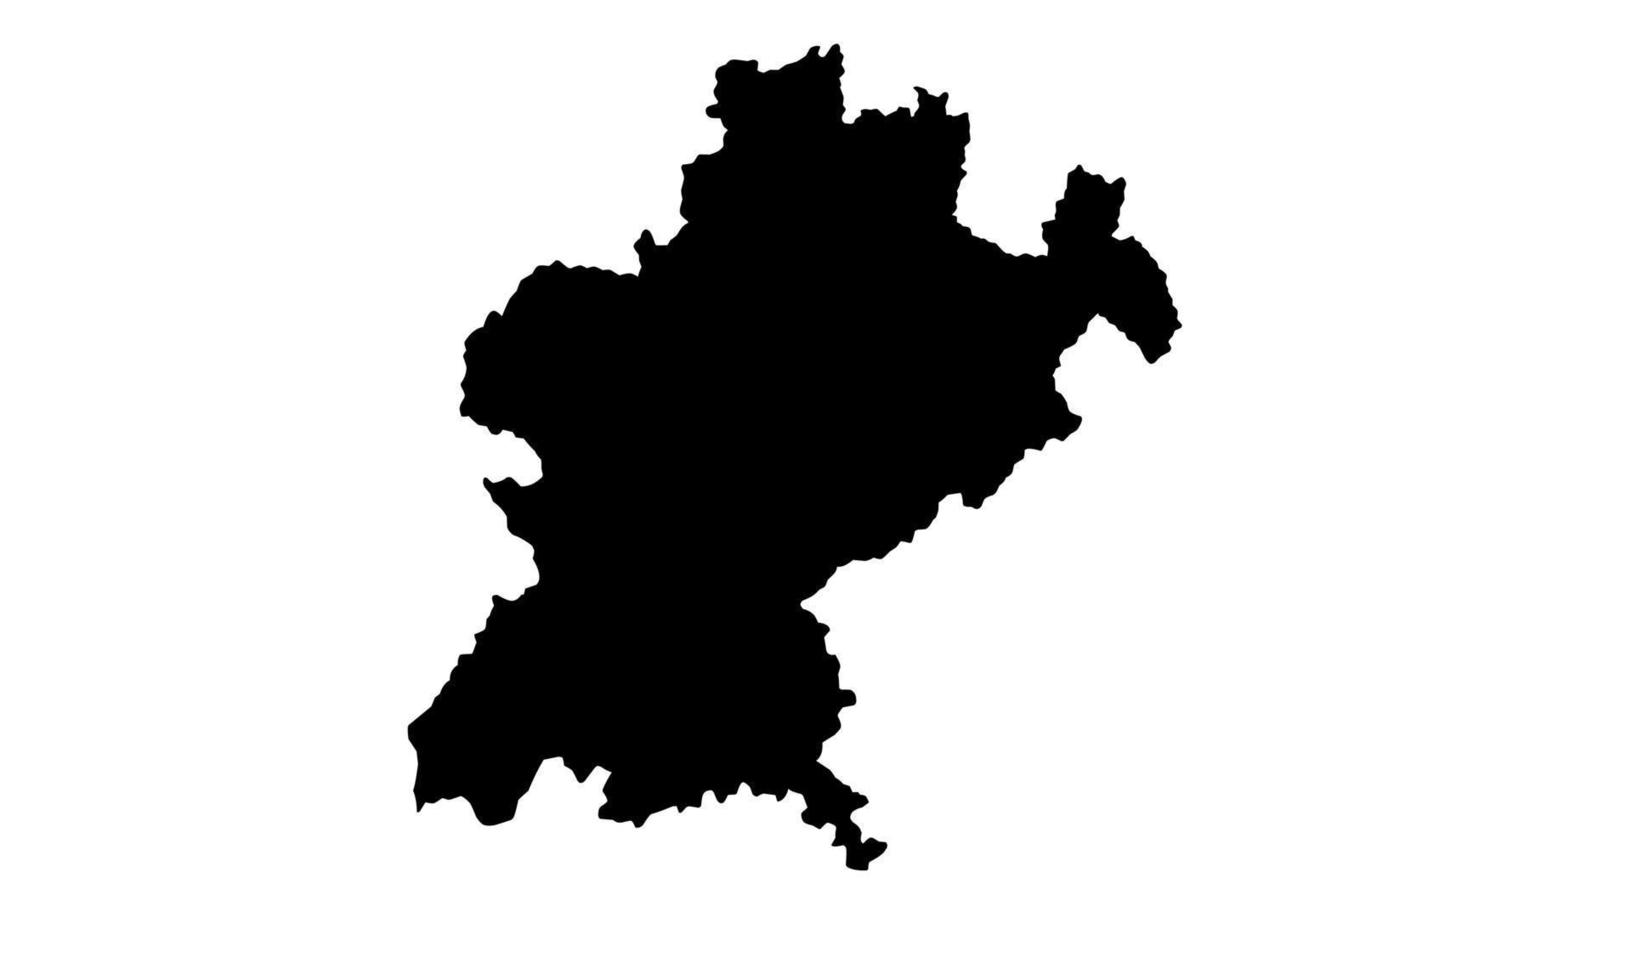 SANTAREM map black silhouette on white background vector